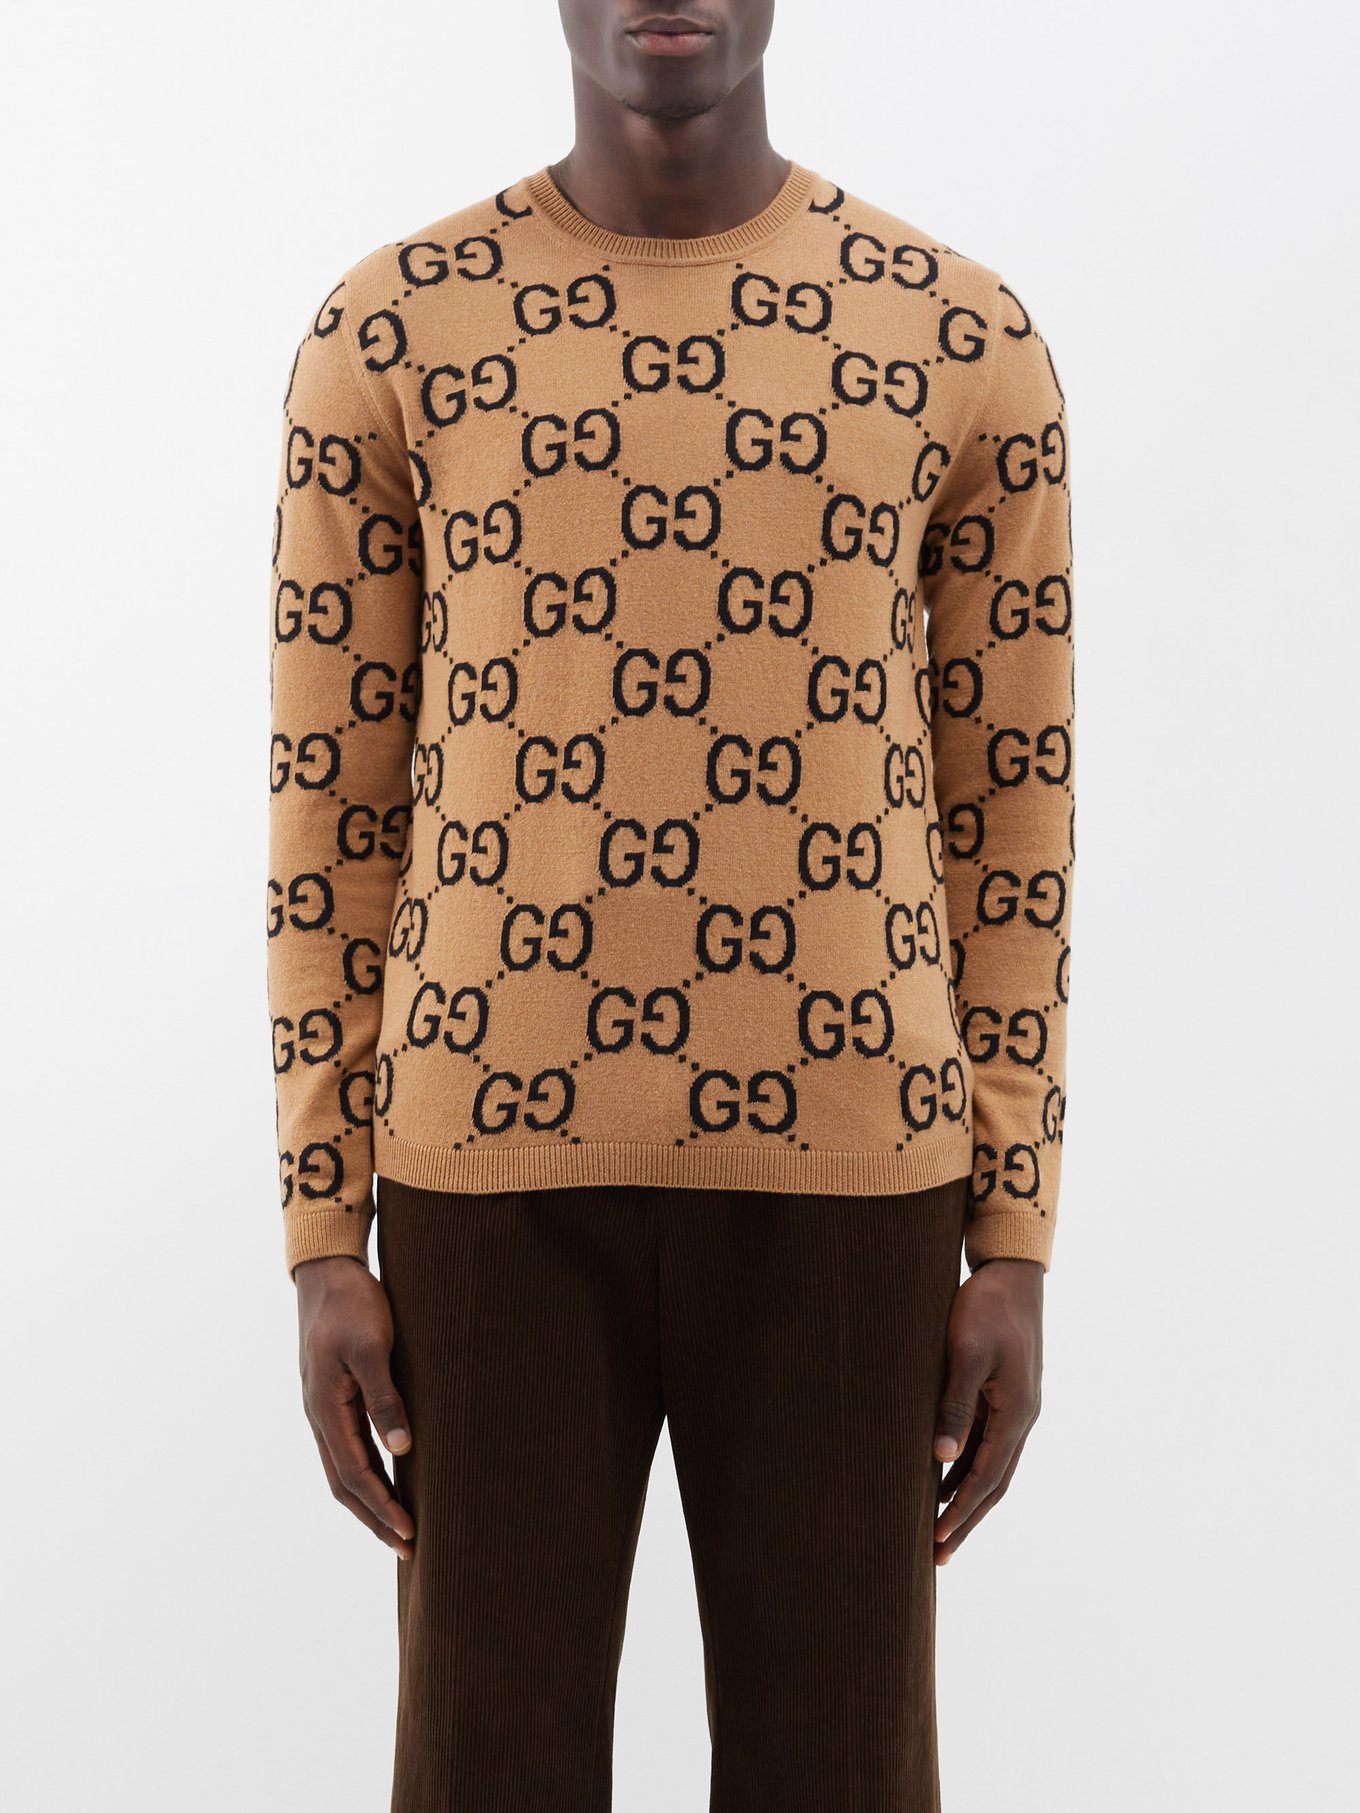 GG Jacquard Wool Sweater in Multicoloured - Gucci